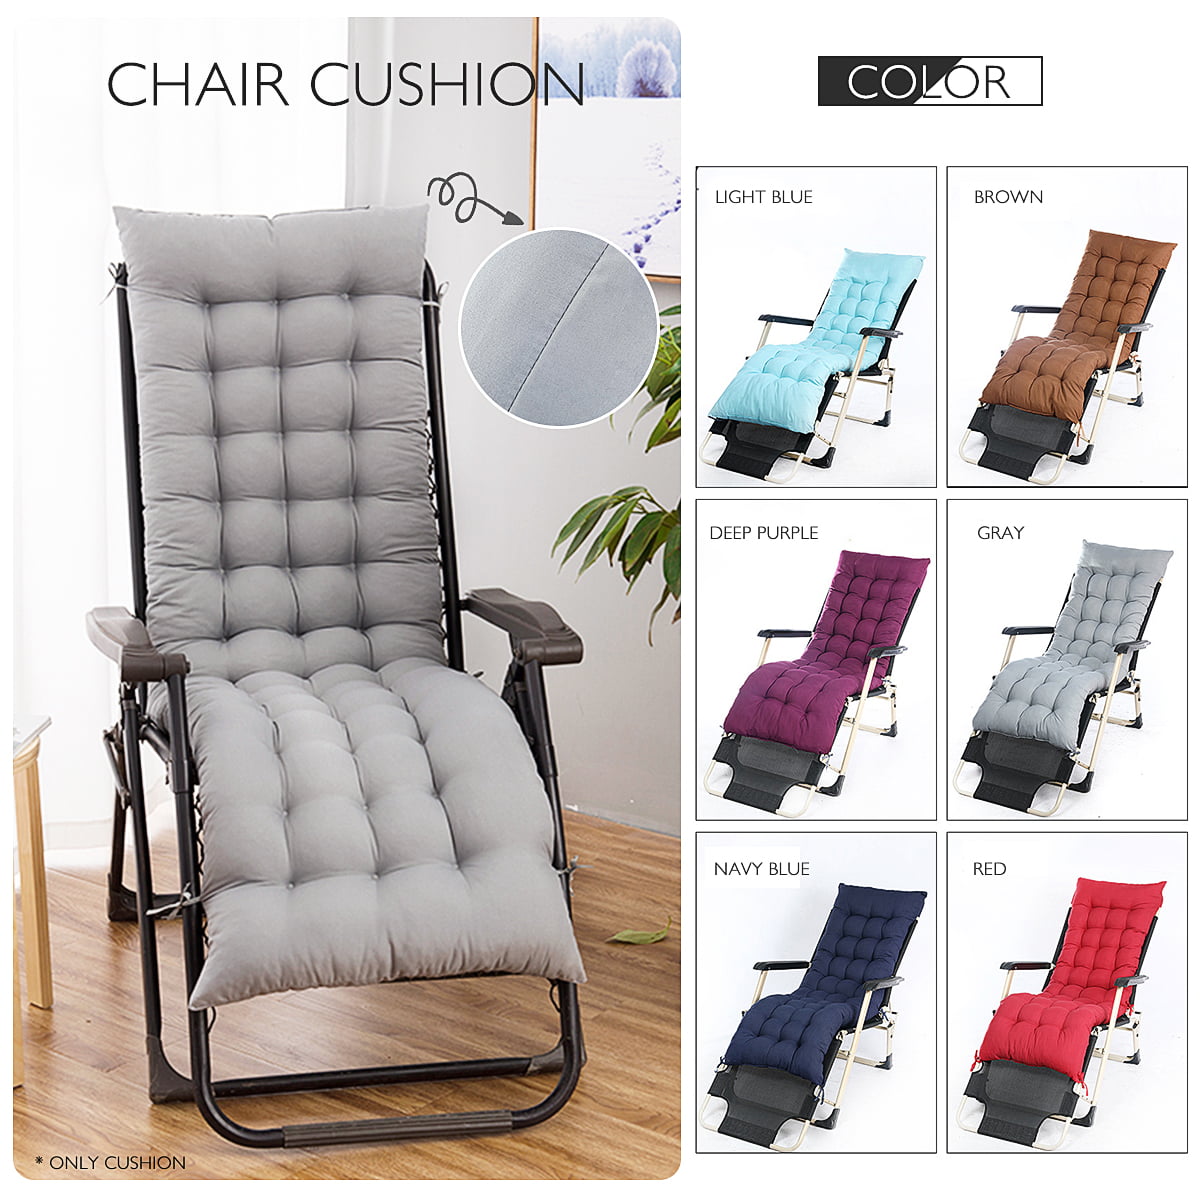 Multifunctional Outdoor Cushion With Backrest Folding Seat Cushion 